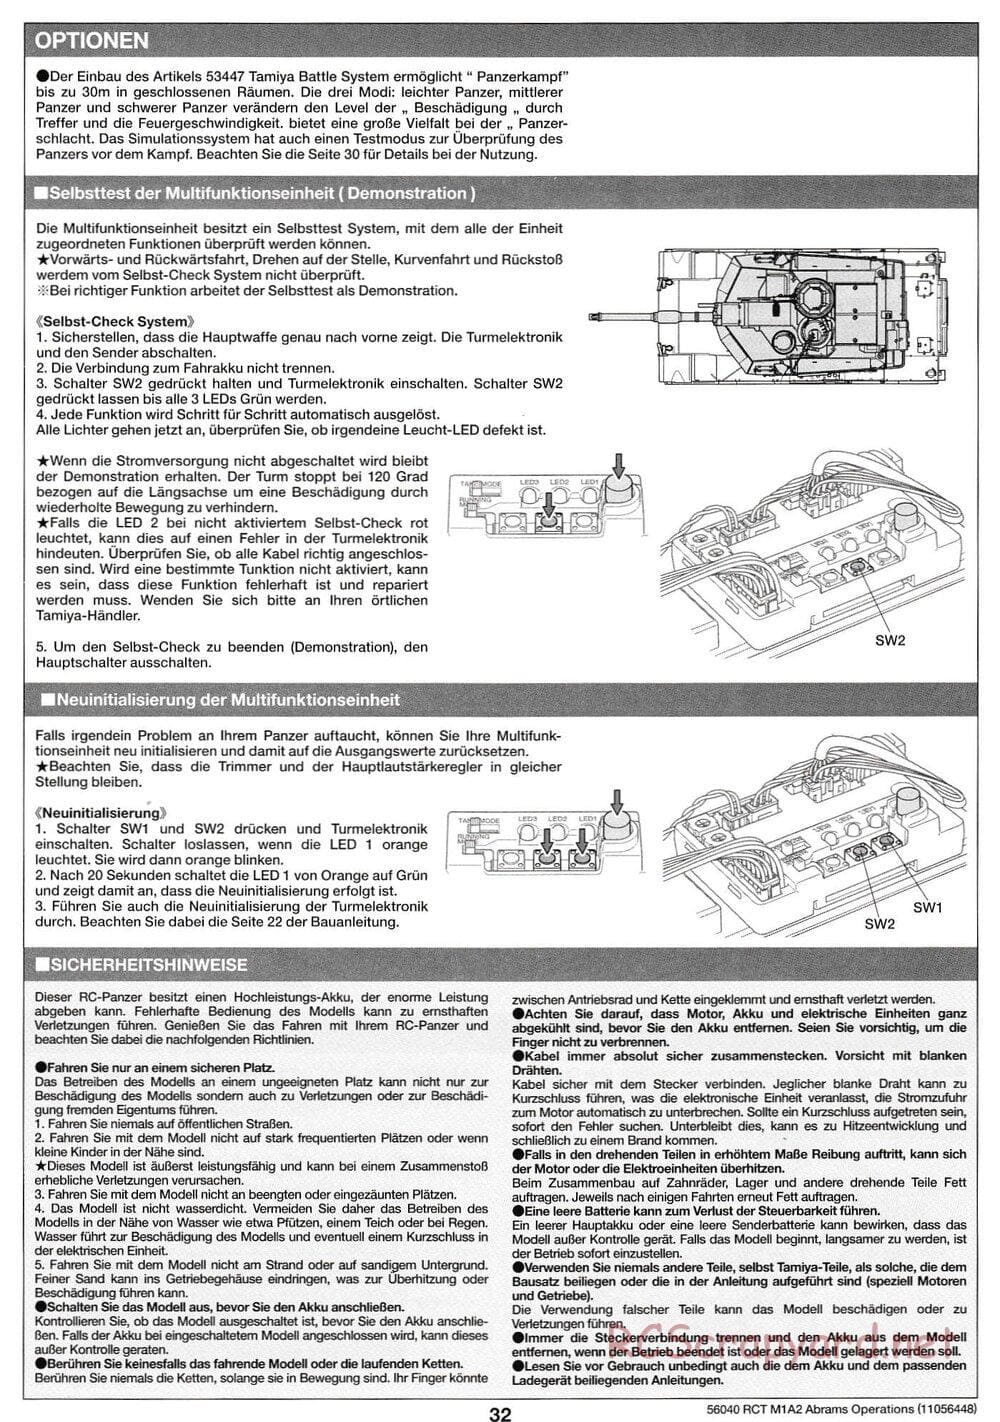 Tamiya - U.S. Main Battle Tank M1A2 Abrams - 1/16 Scale Chassis - Operation Manual - Page 10